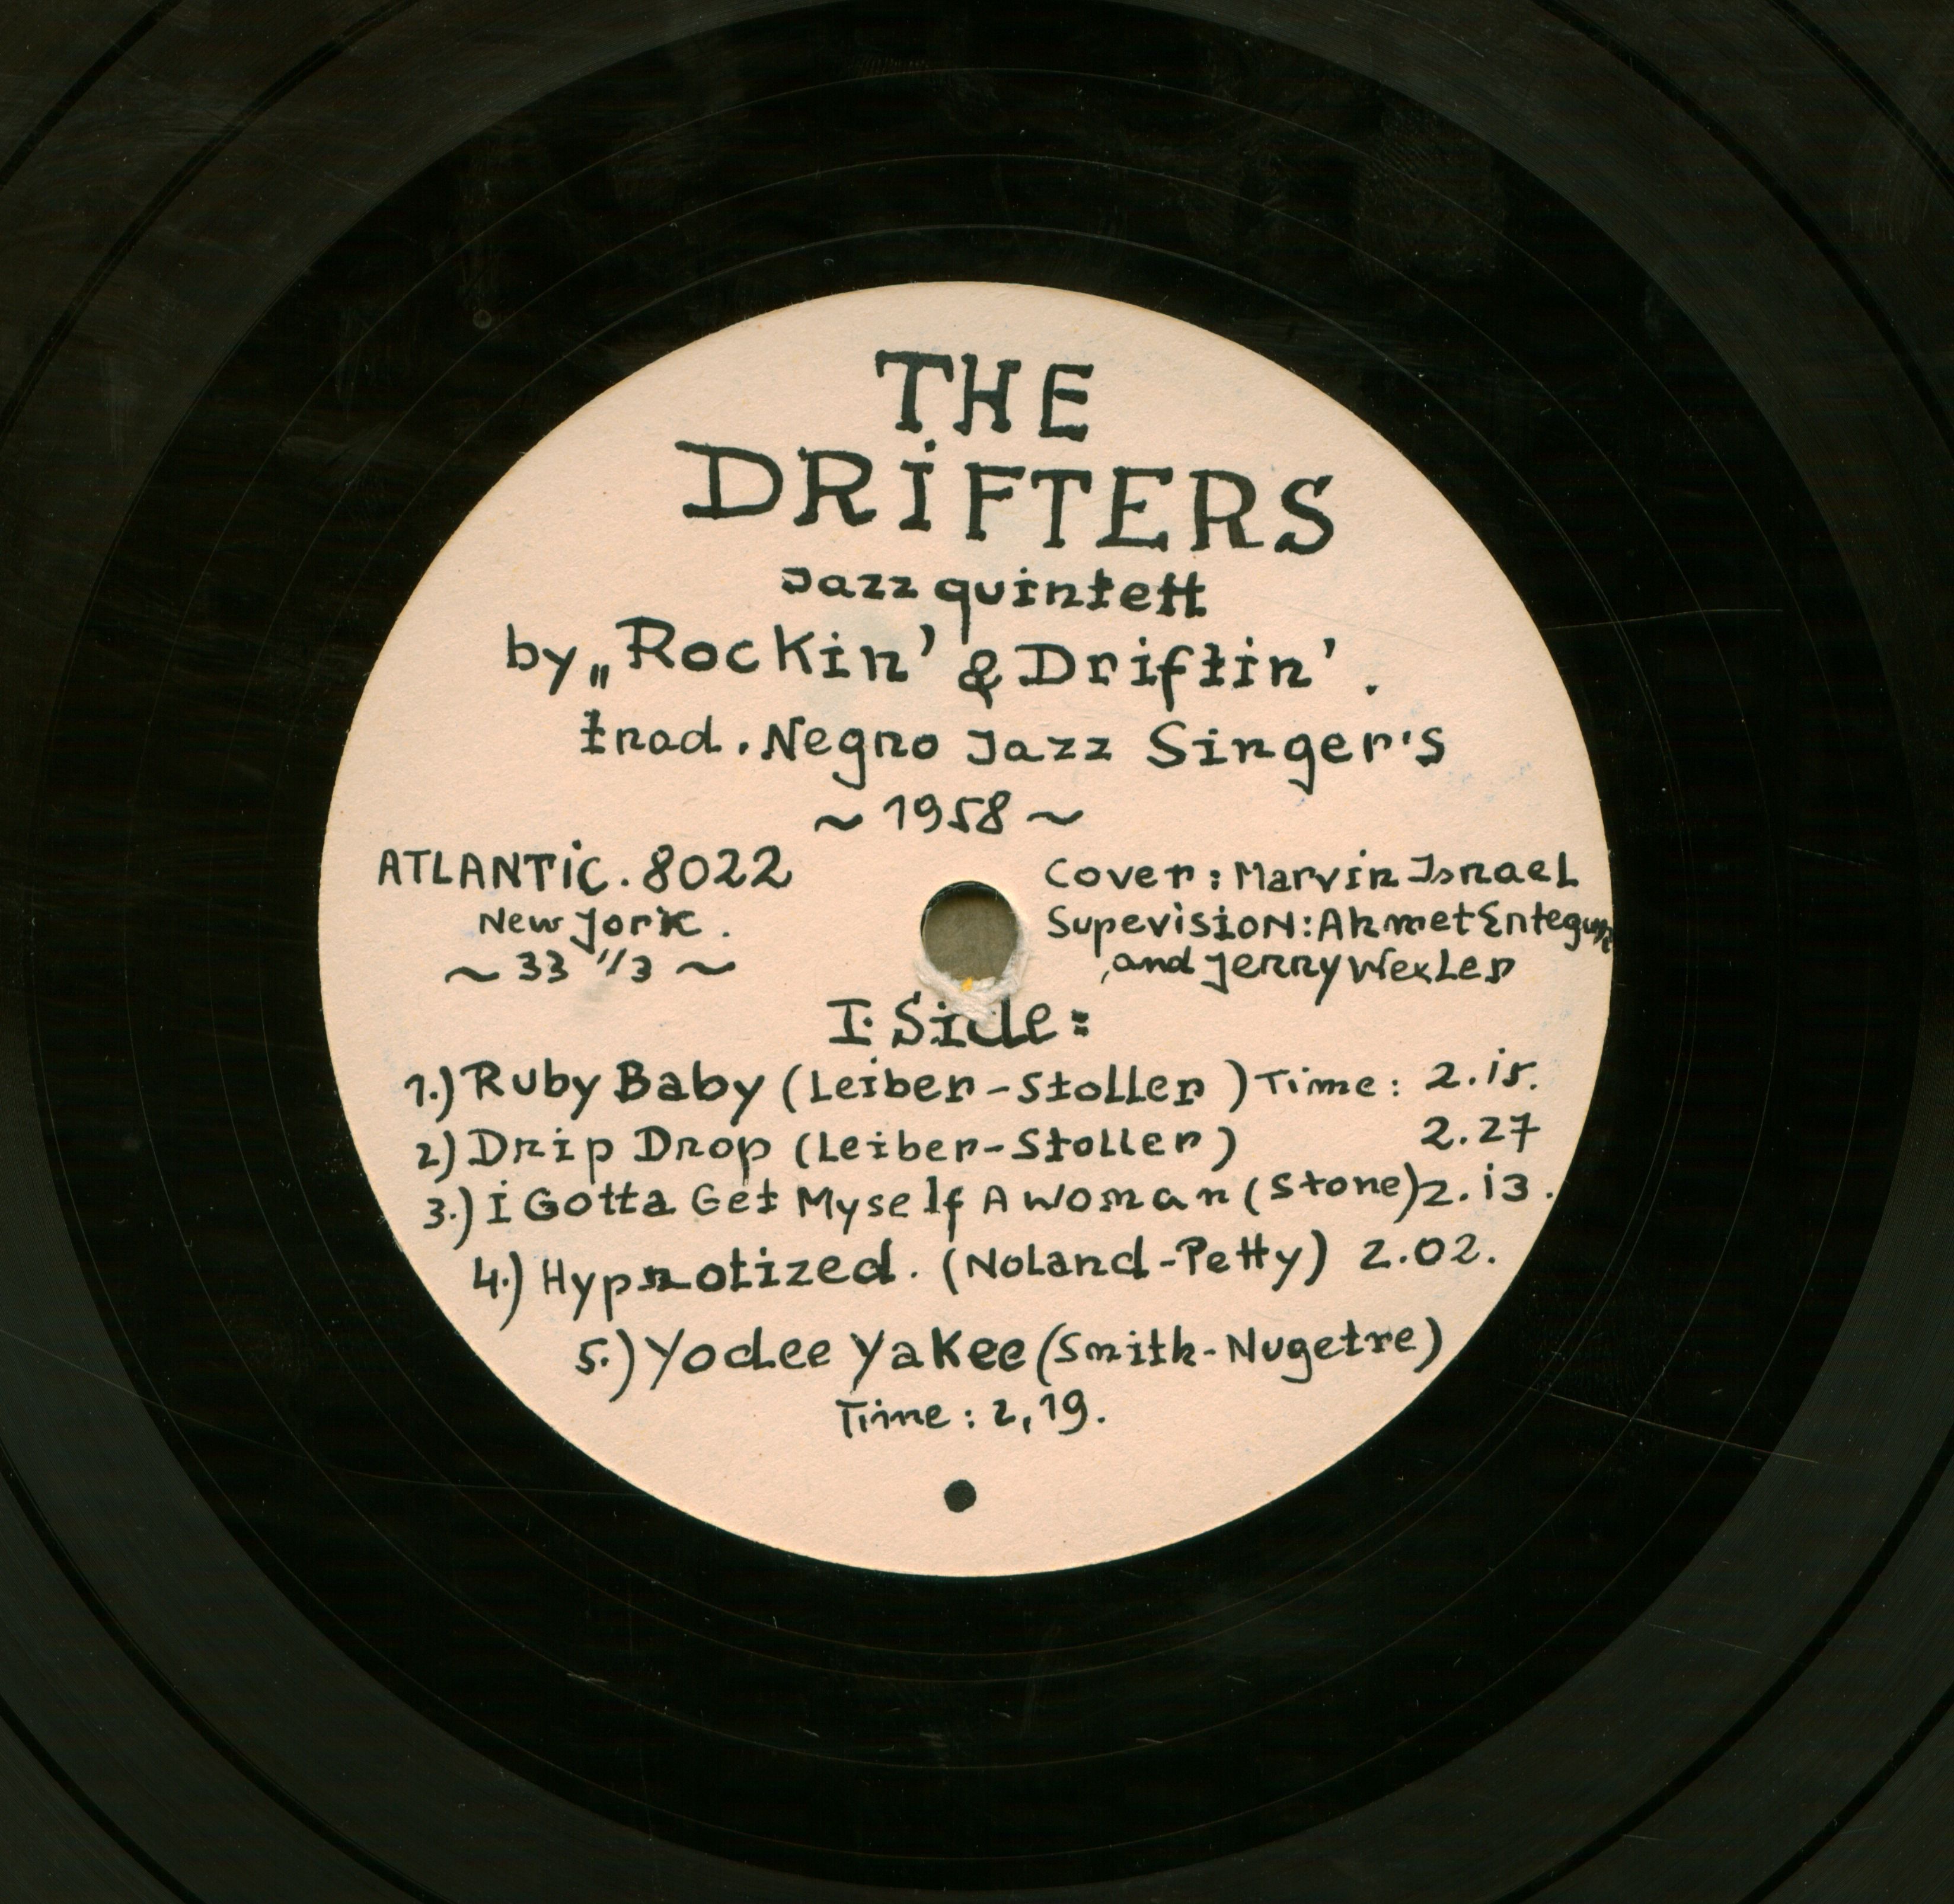 The Drifters jazz quintett by "Rockin' & Driftin" : trad. Negro Jazz Singer's